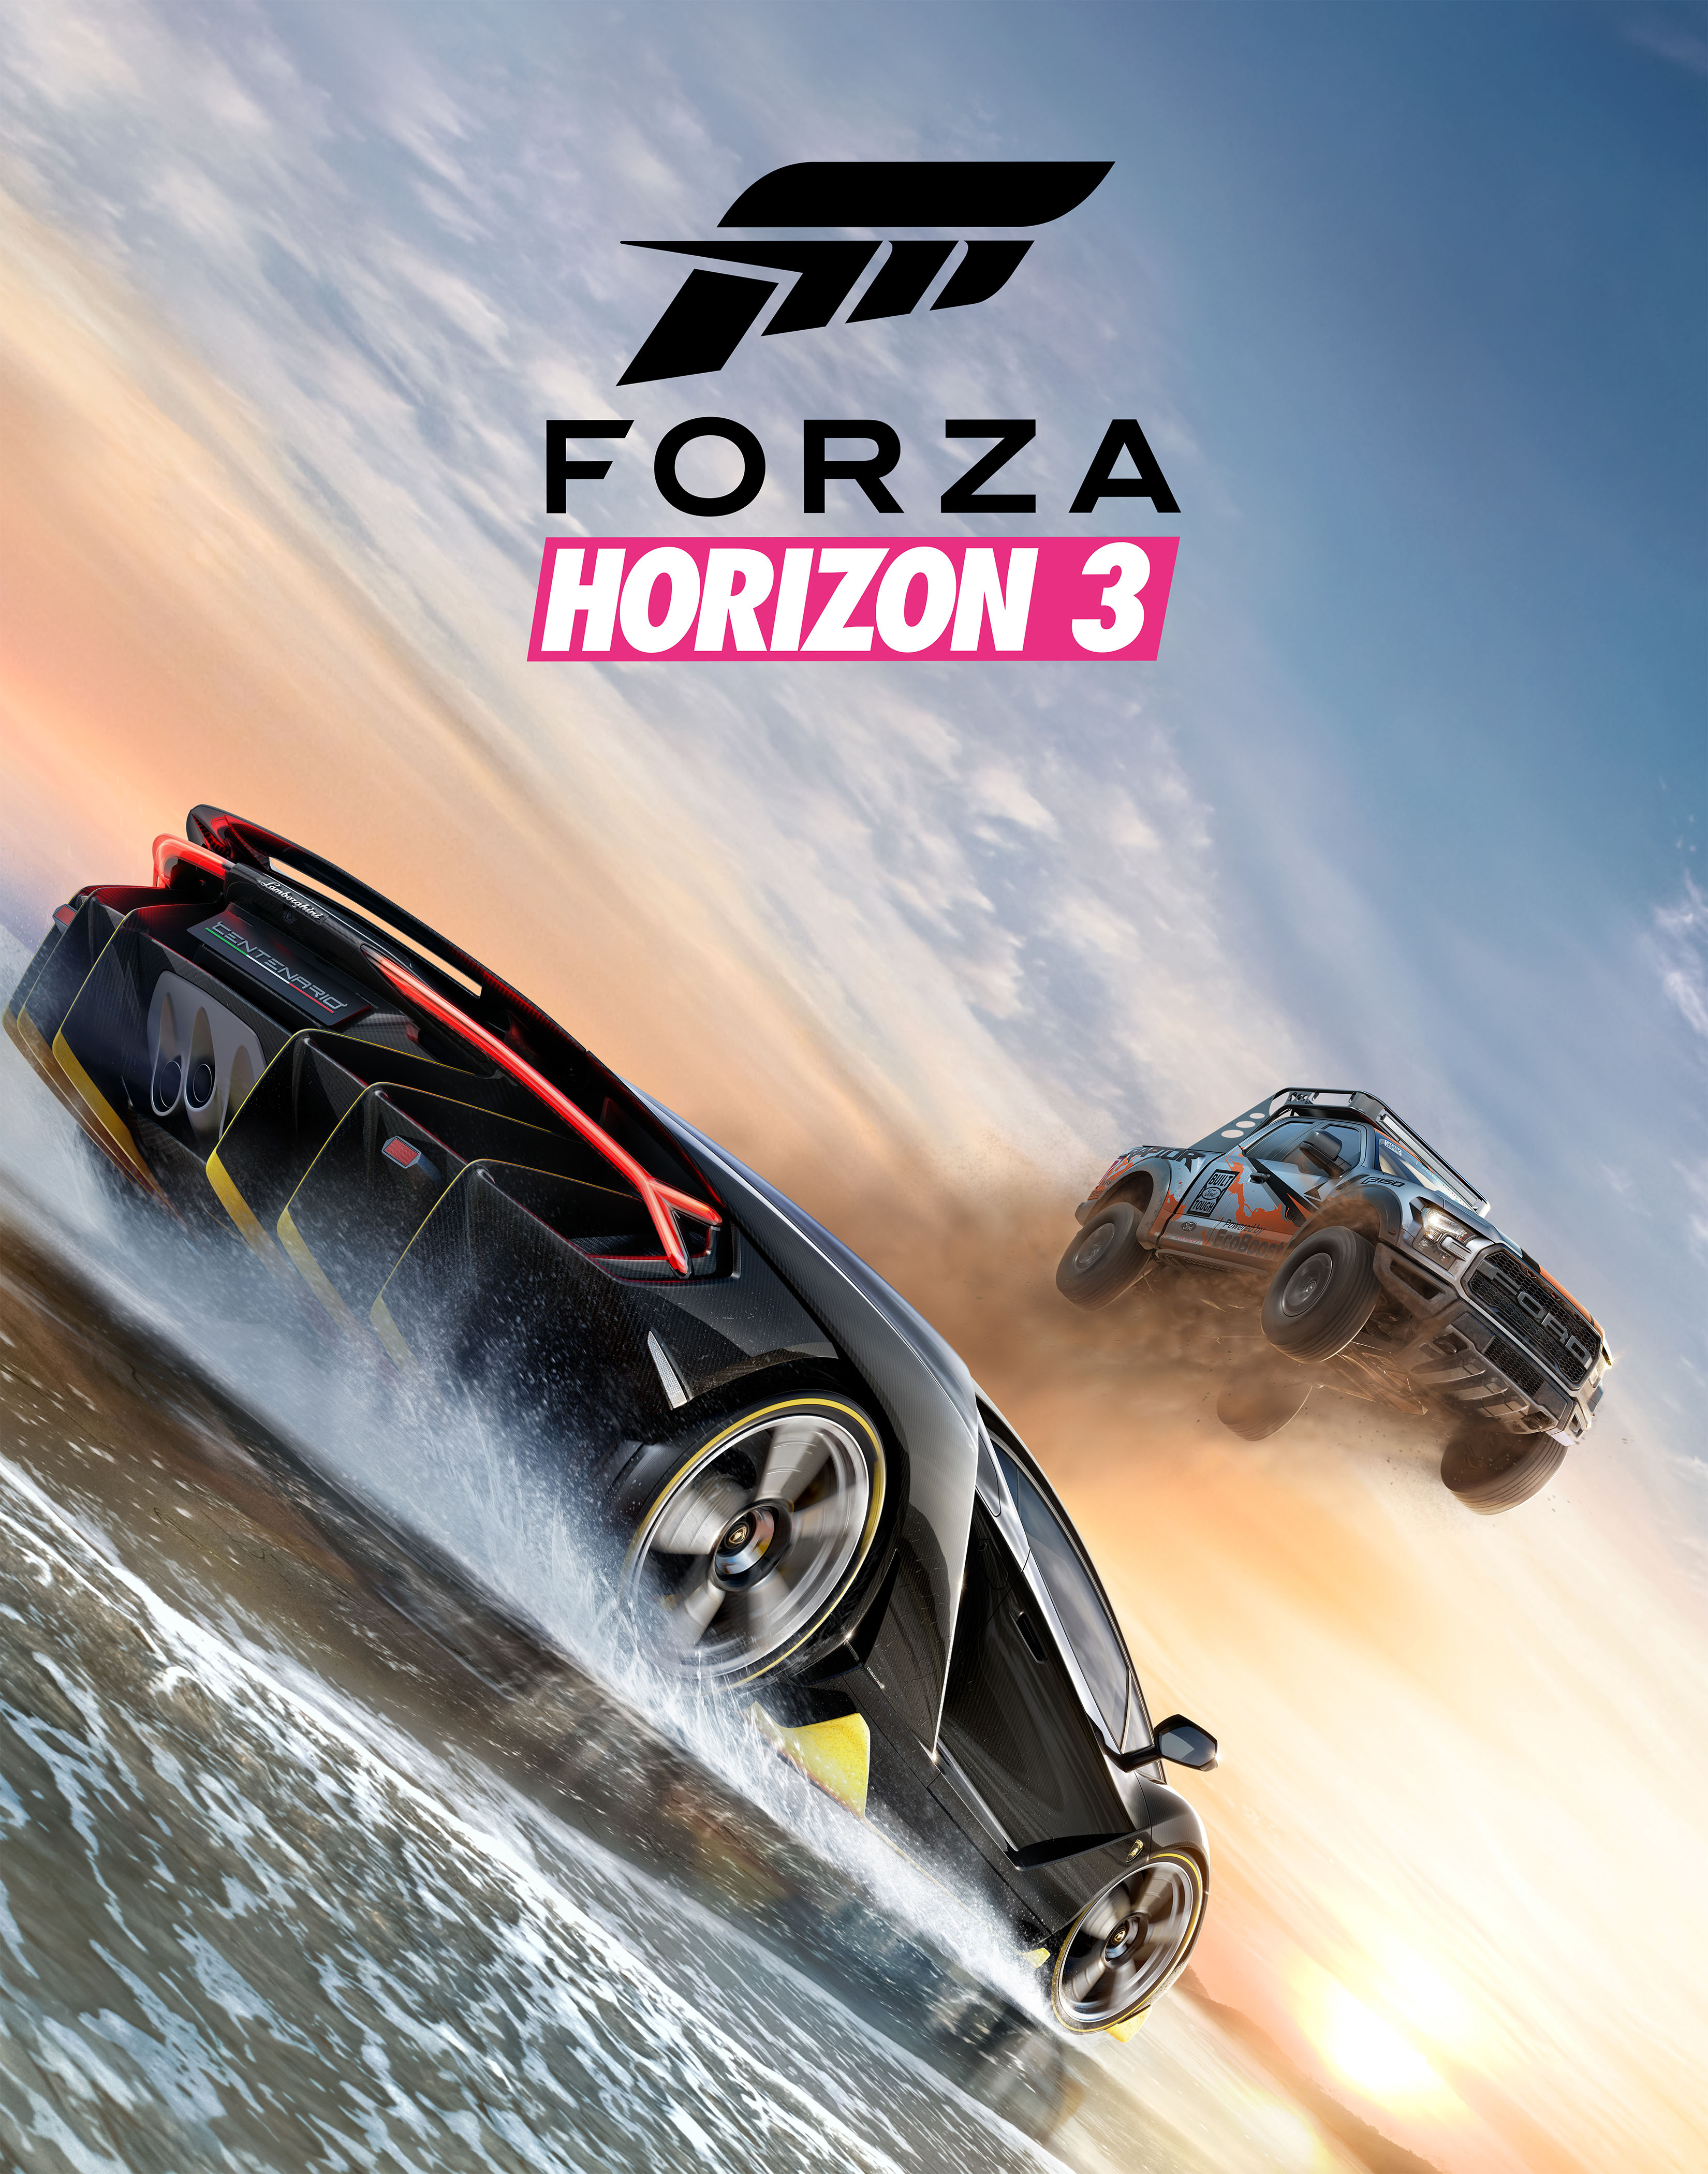 Forza Motorsport 5/Cars, Forza Wiki